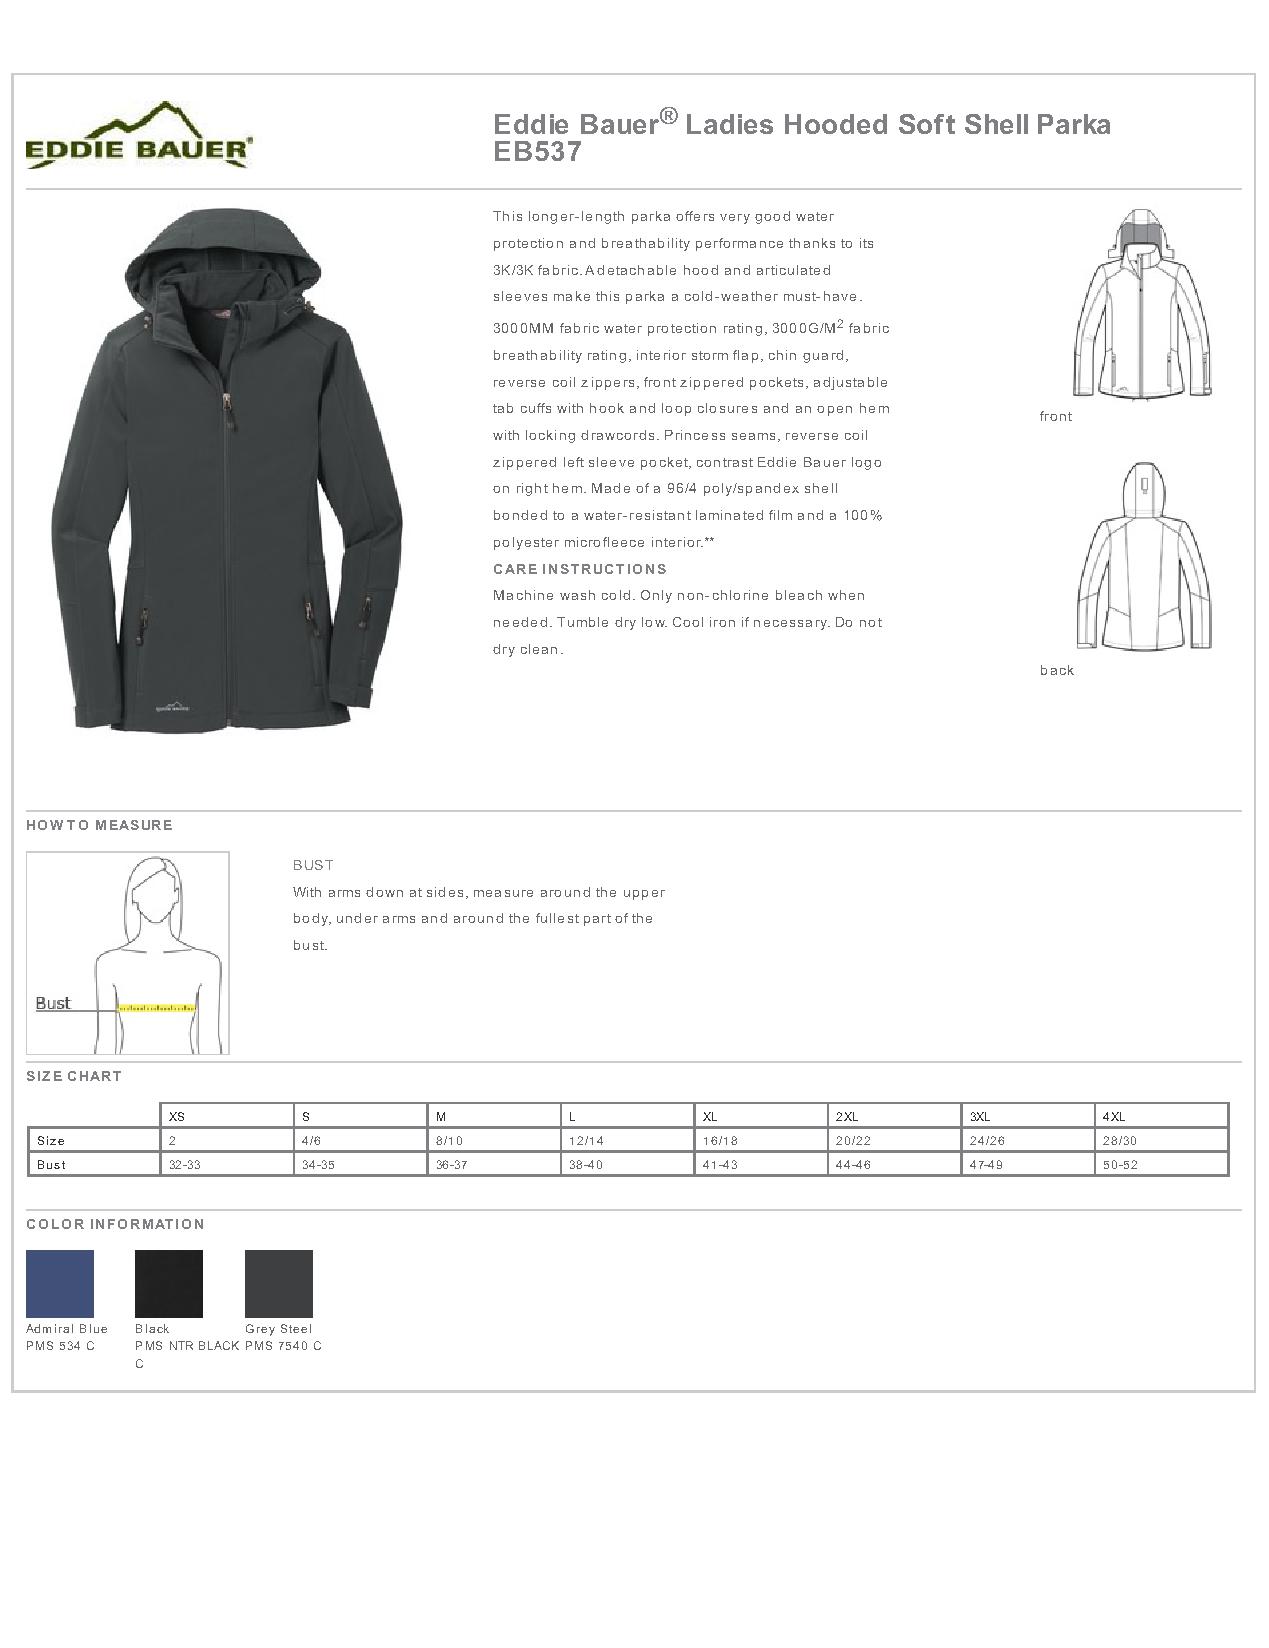 Eddie Bauer Shaded Crosshatch Soft Shell Jacket Size Chart